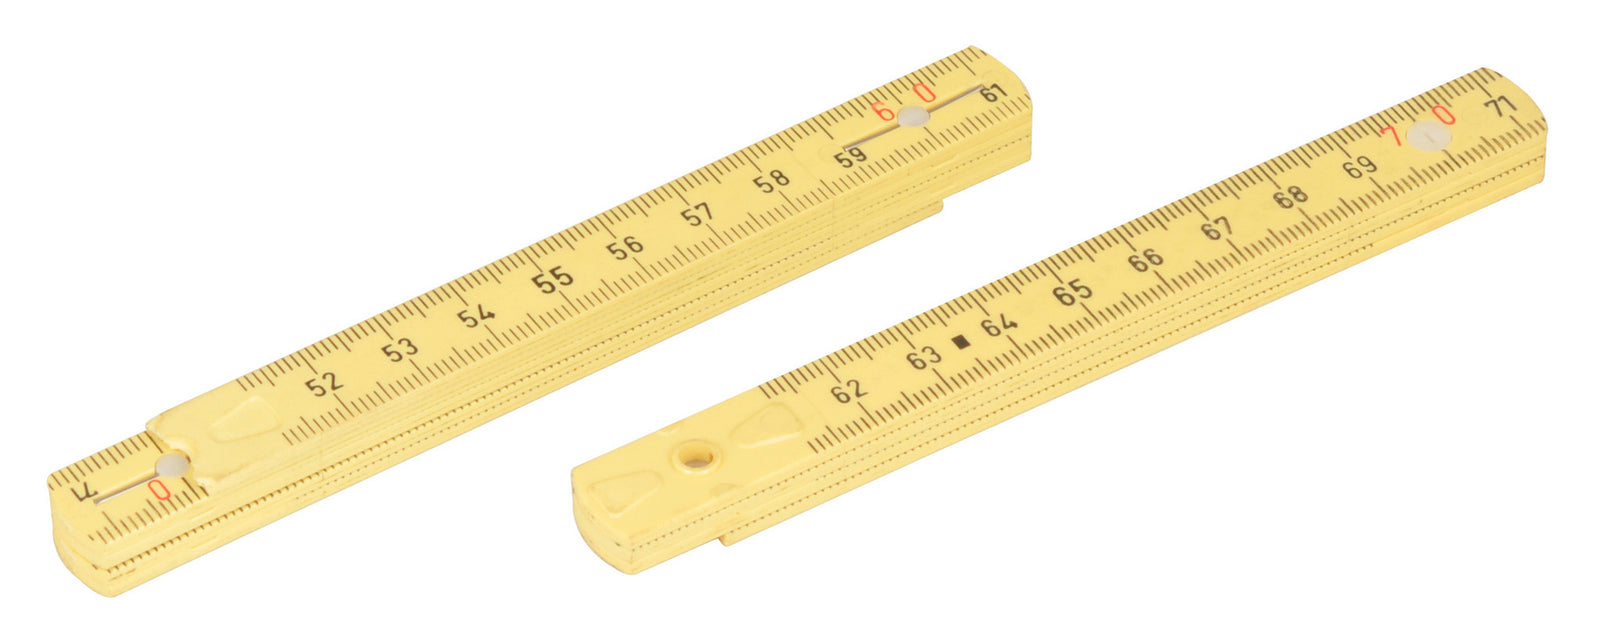 Folding Plastic Meter Stick Ruler New